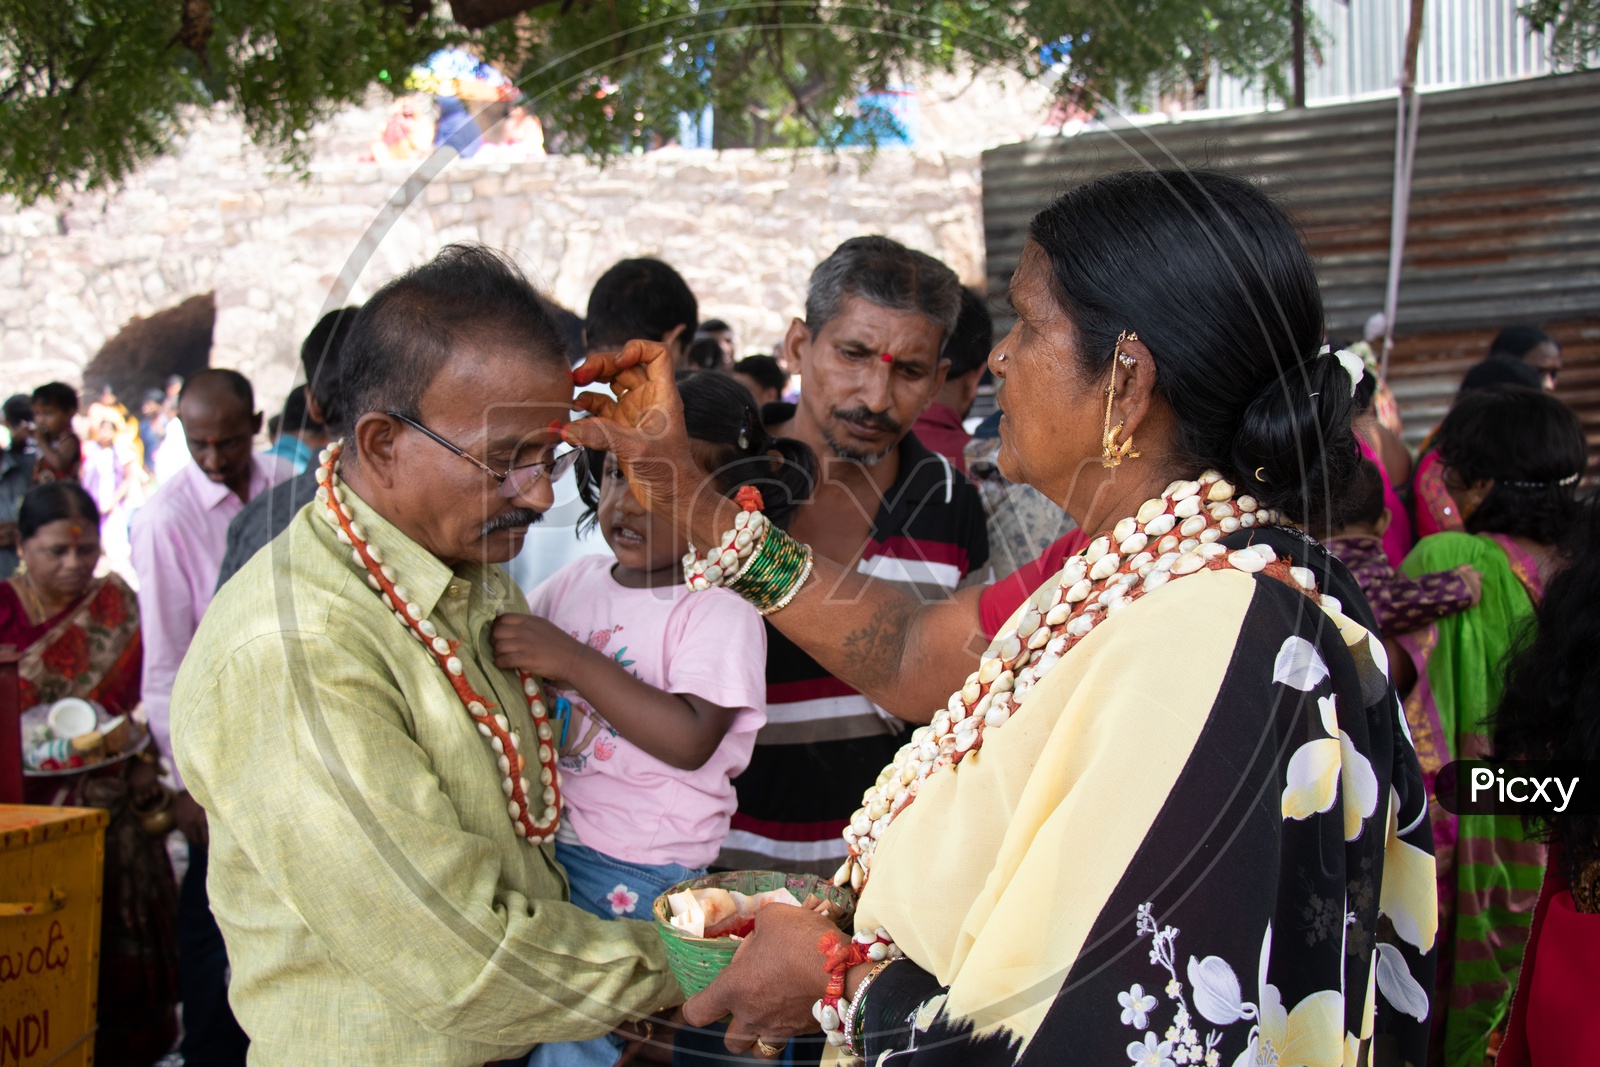 Devotees In At Golkonda Fort During Bonalu Festival Celebrations